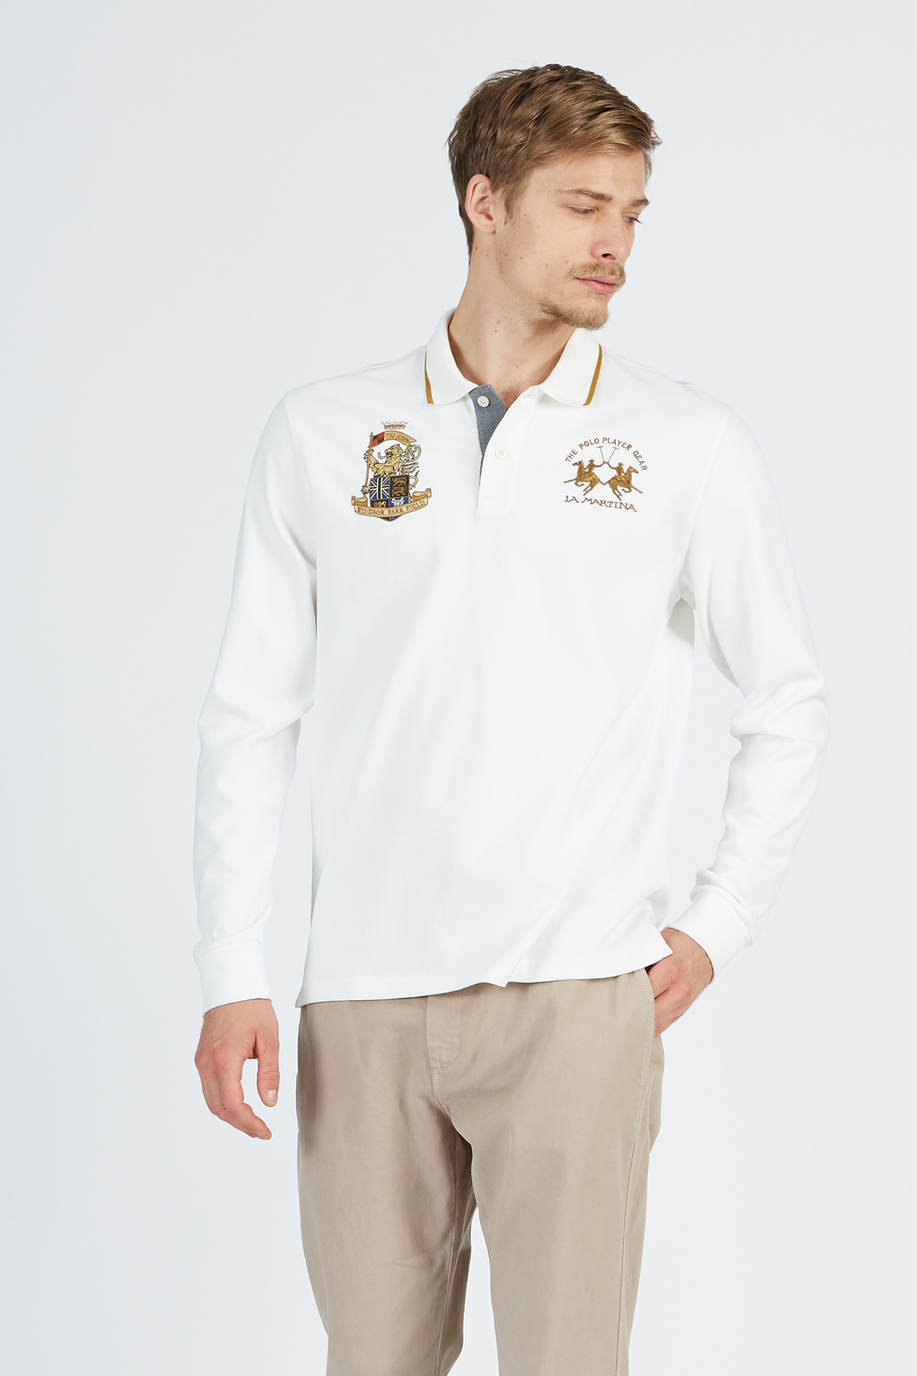 Herren-Poloshirt mit langen Ärmeln aus Jersey-Baumwolle - Regular fit | La Martina - Official Online Shop